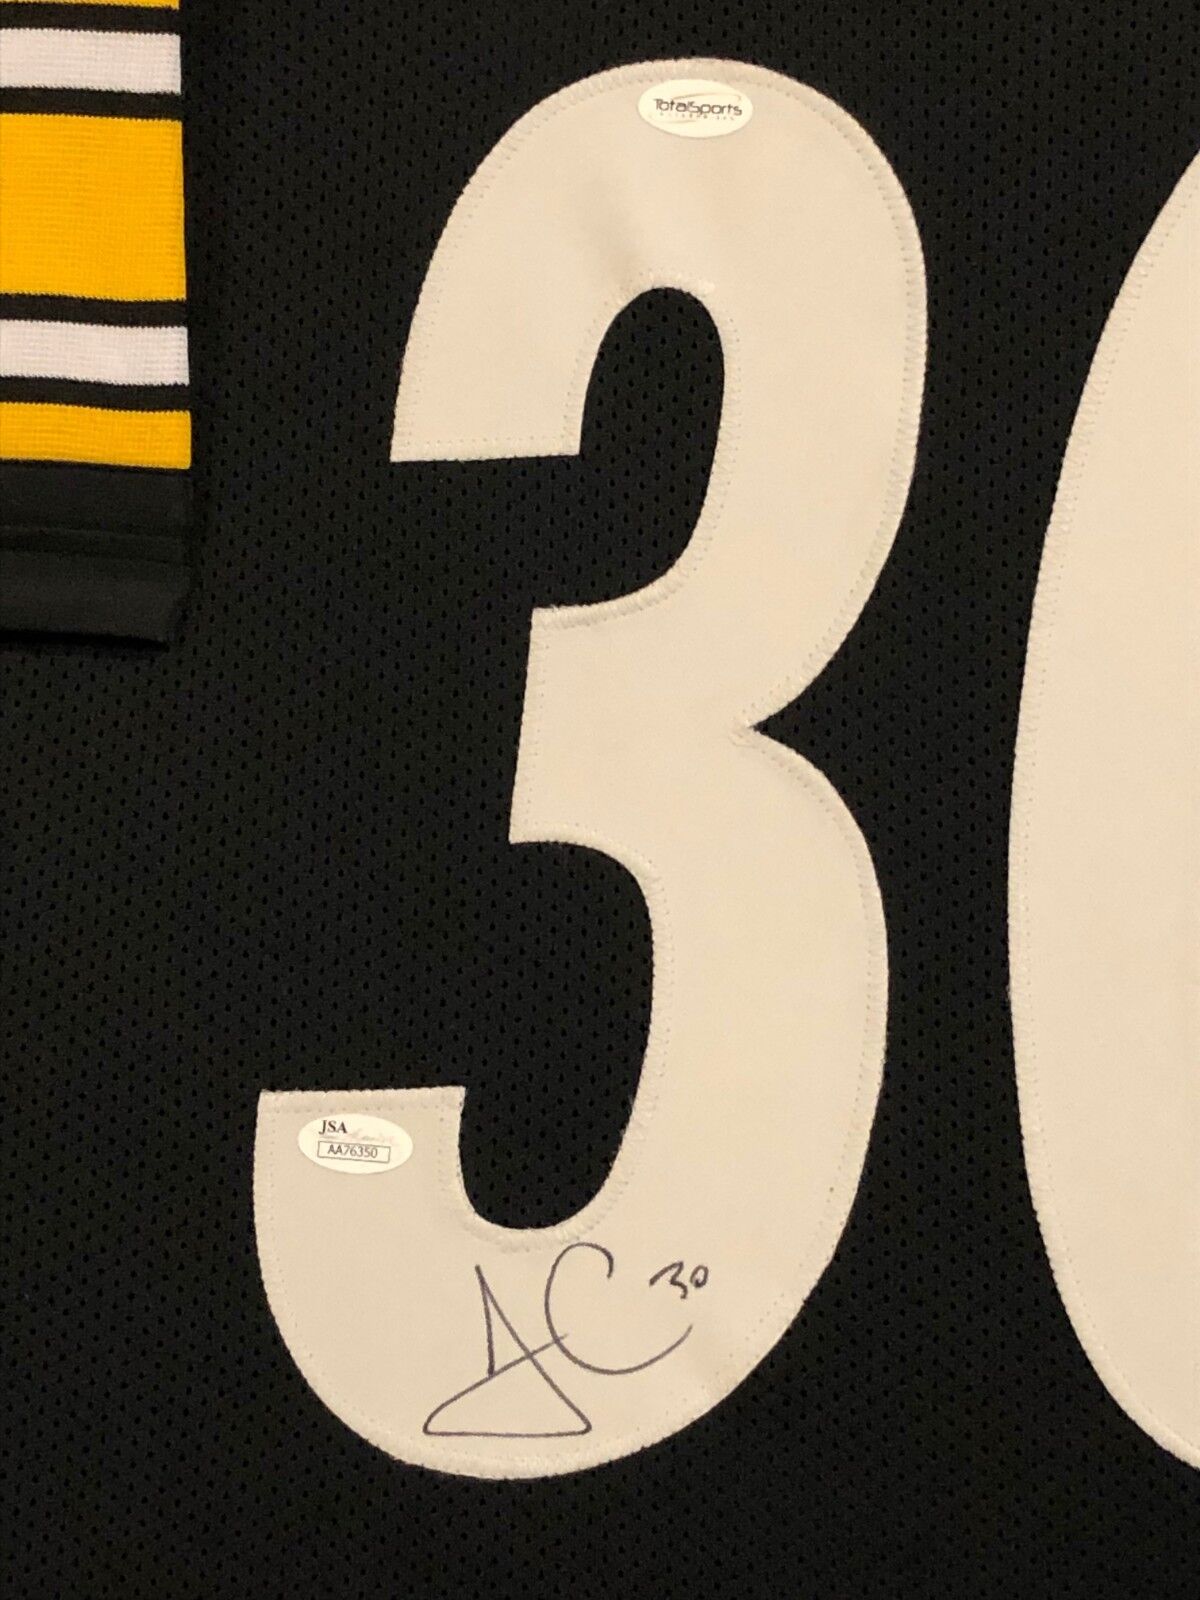 MVP Authentics Framed Pittsburgh Steelers James Conner Autographed Signed Jersey Jsa Coa 450 sports jersey framing , jersey framing